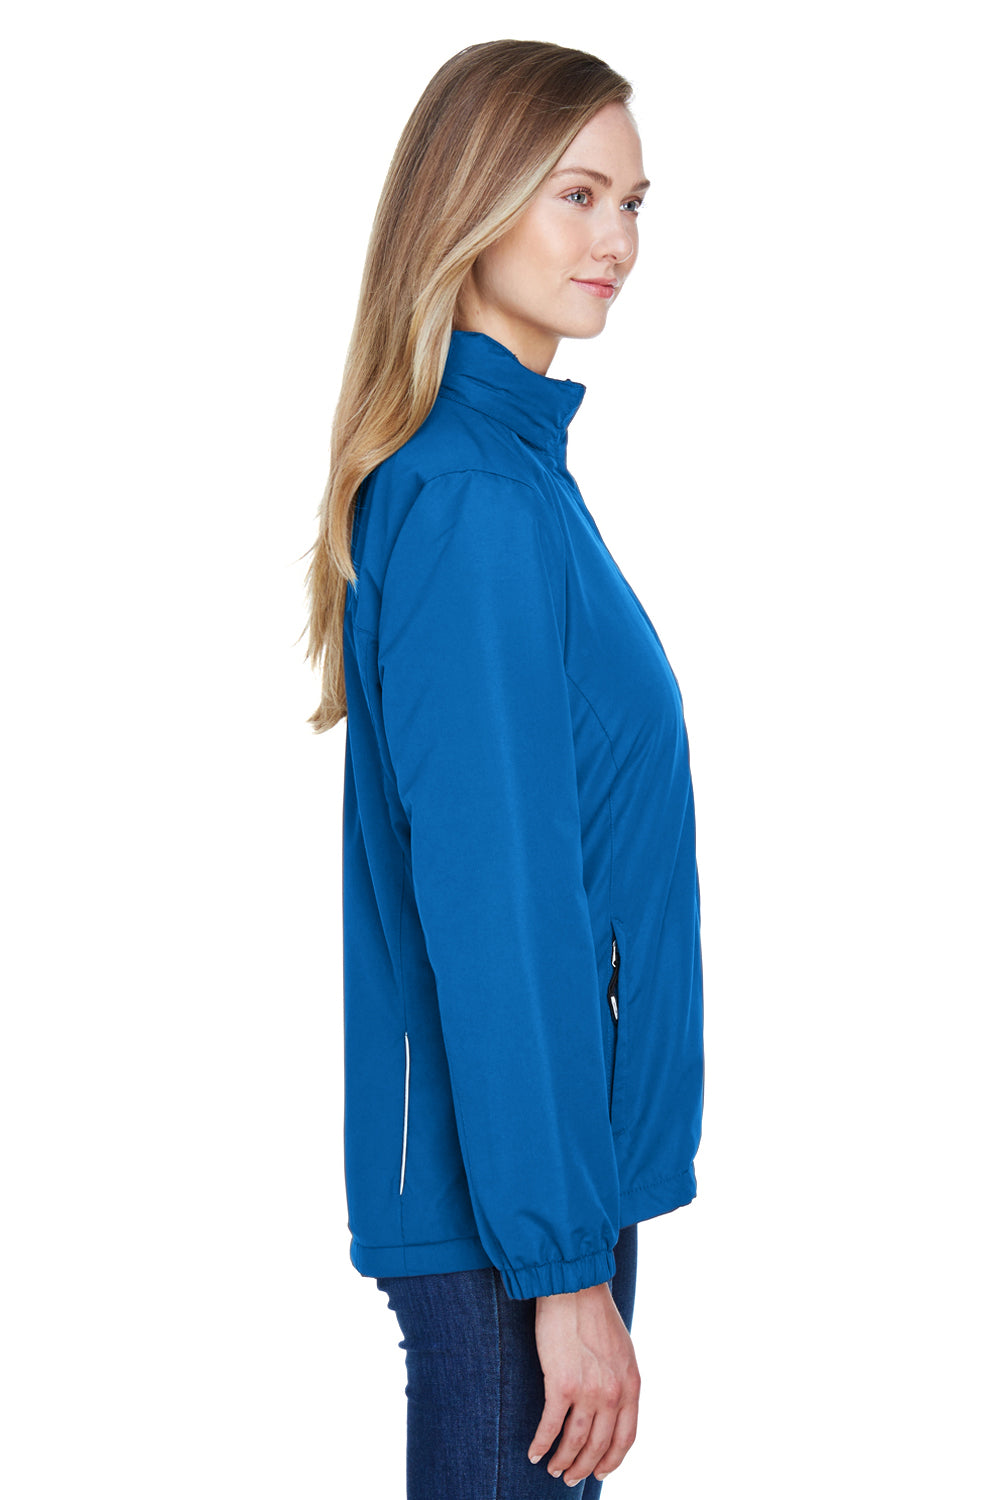 Core 365 78224 Womens Profile Water Resistant Full Zip Hooded Jacket Royal Blue Side